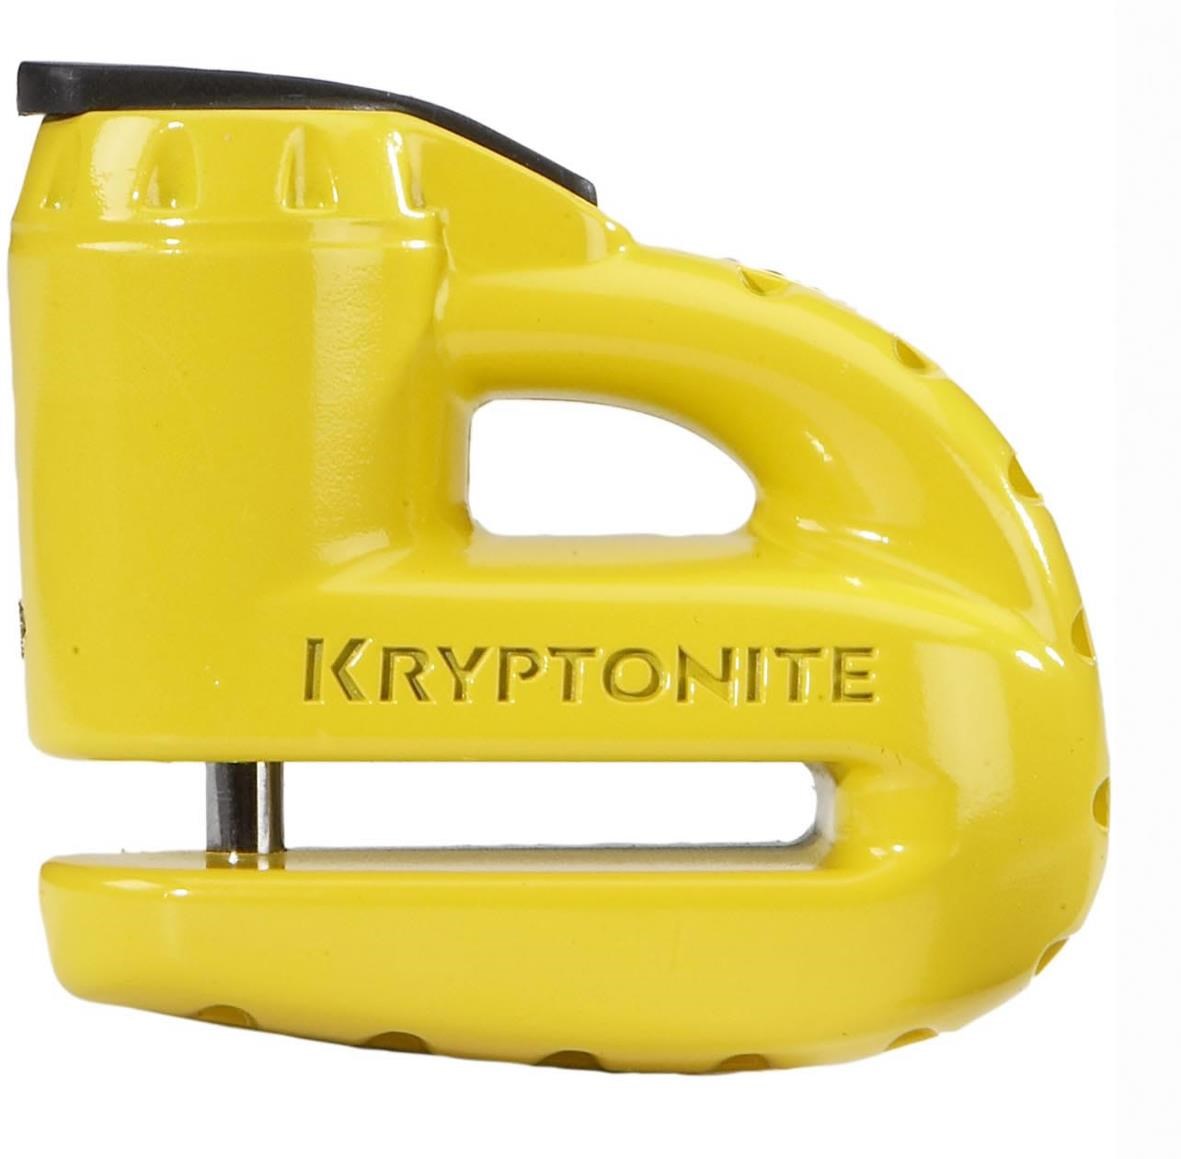 Kryptonite Keeper 5-S Disc Lock product image